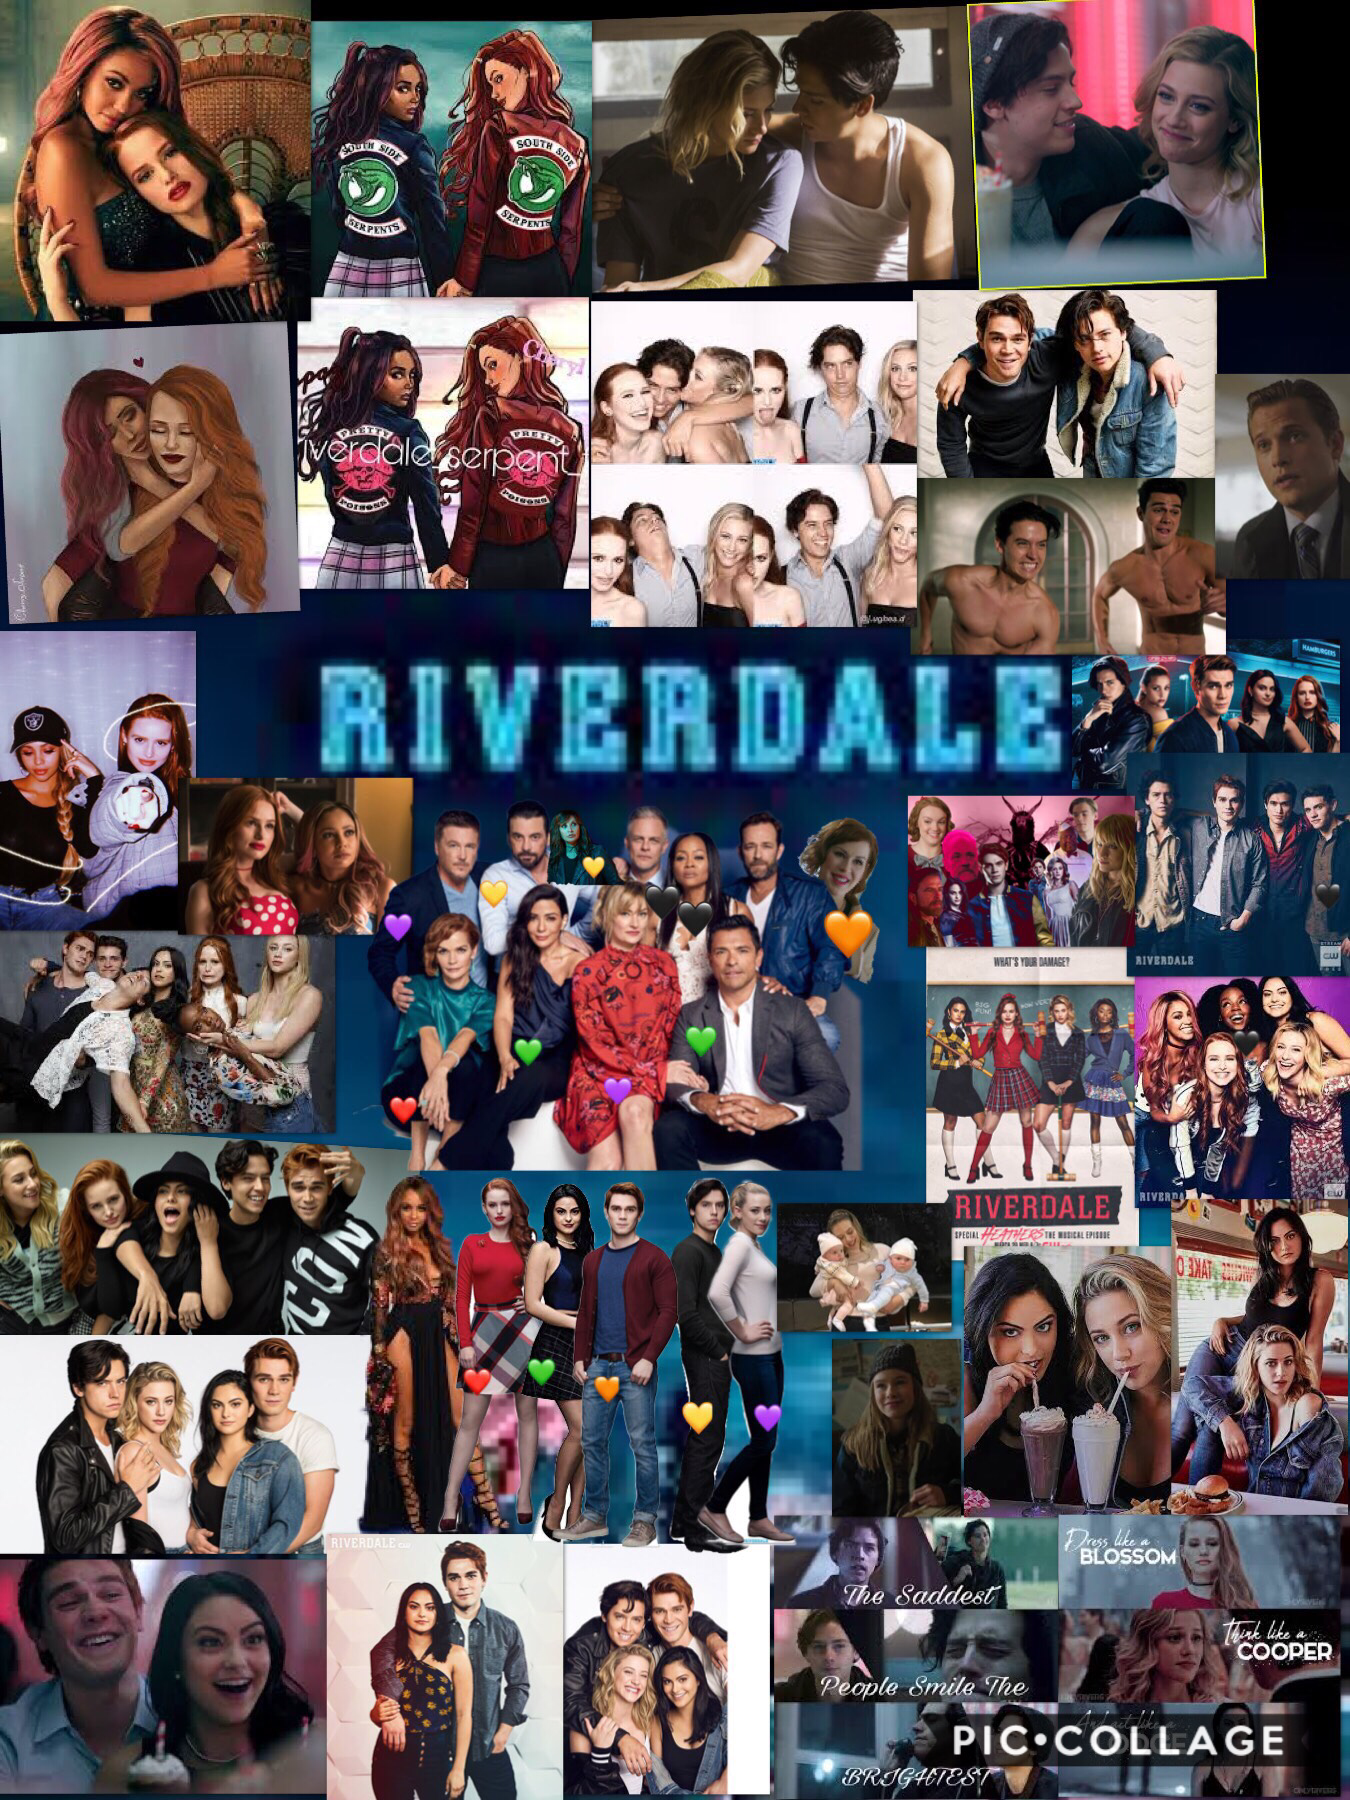 Riverdale.my new favorite show. Who else loves riverDale?